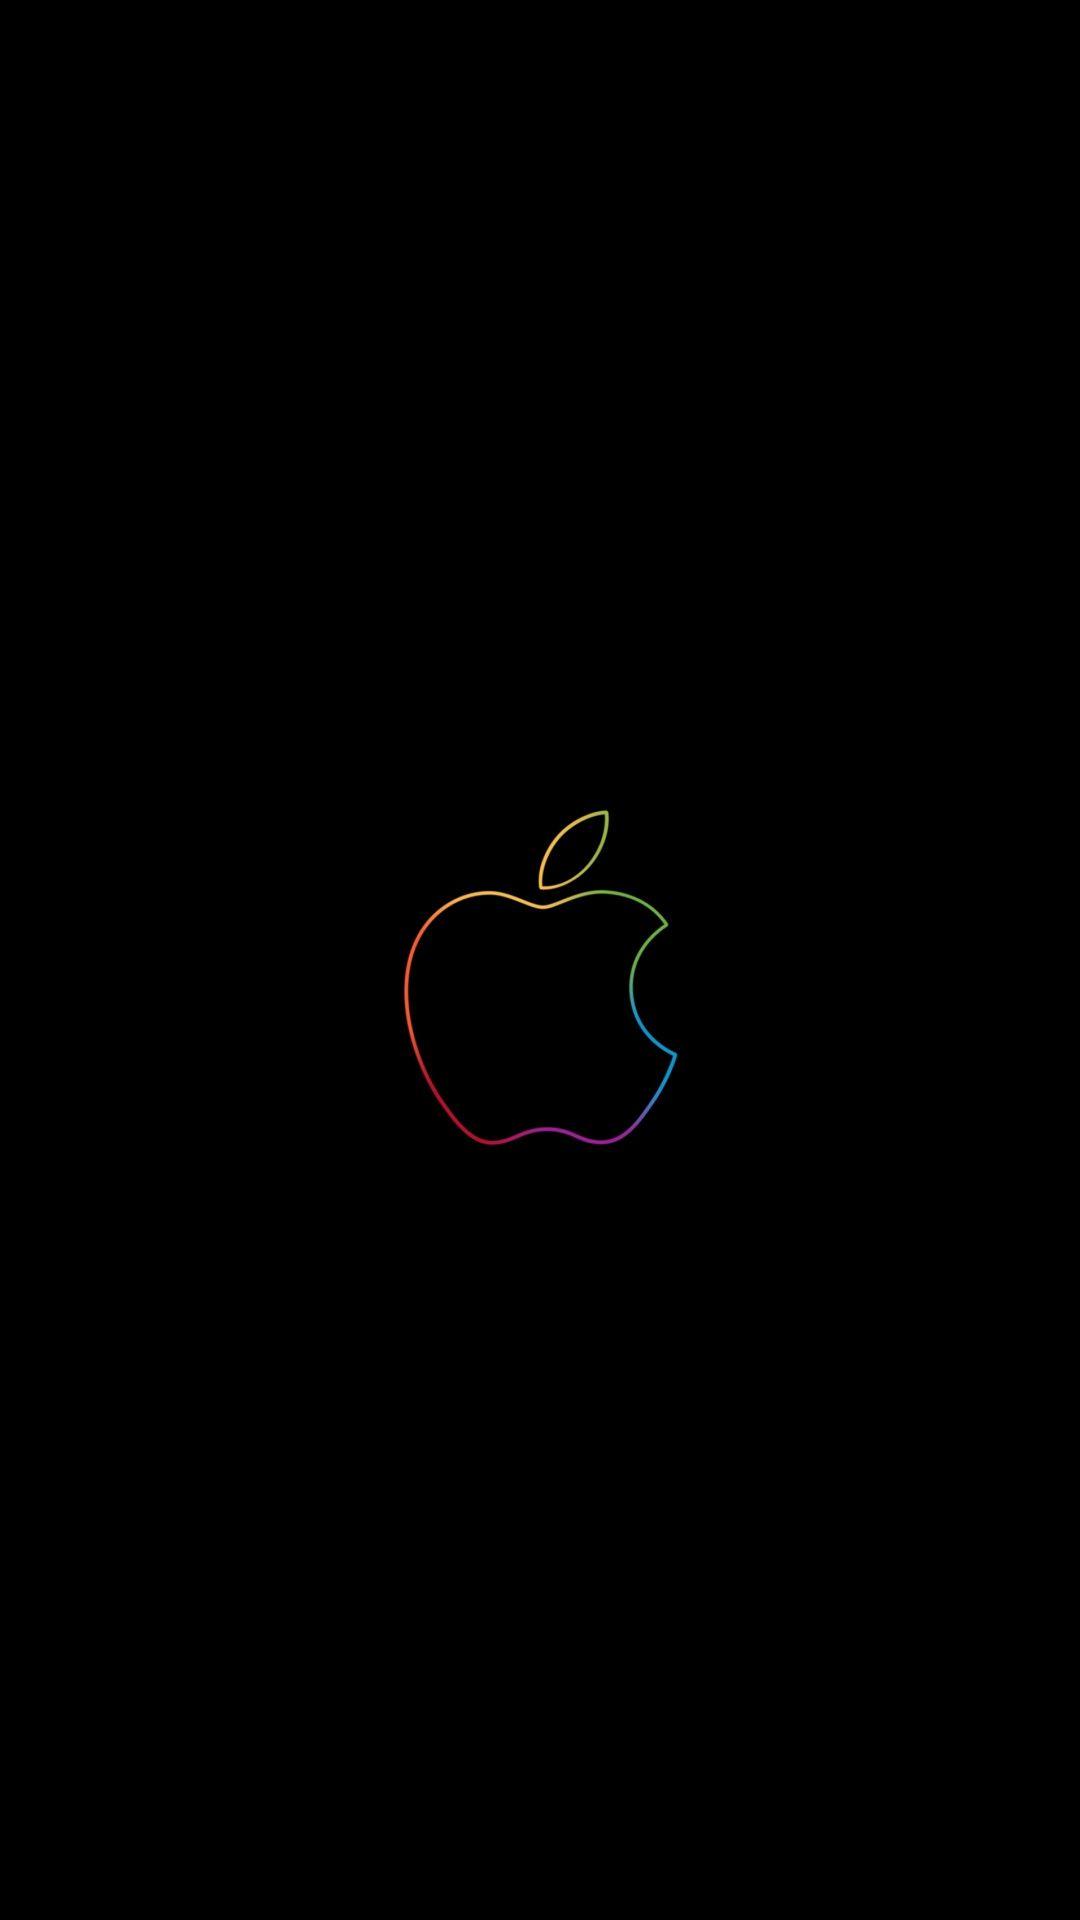 Black Apple Logo Iphone Wallpapers Top Free Black Apple Logo Iphone Backgrounds Wallpaperaccess